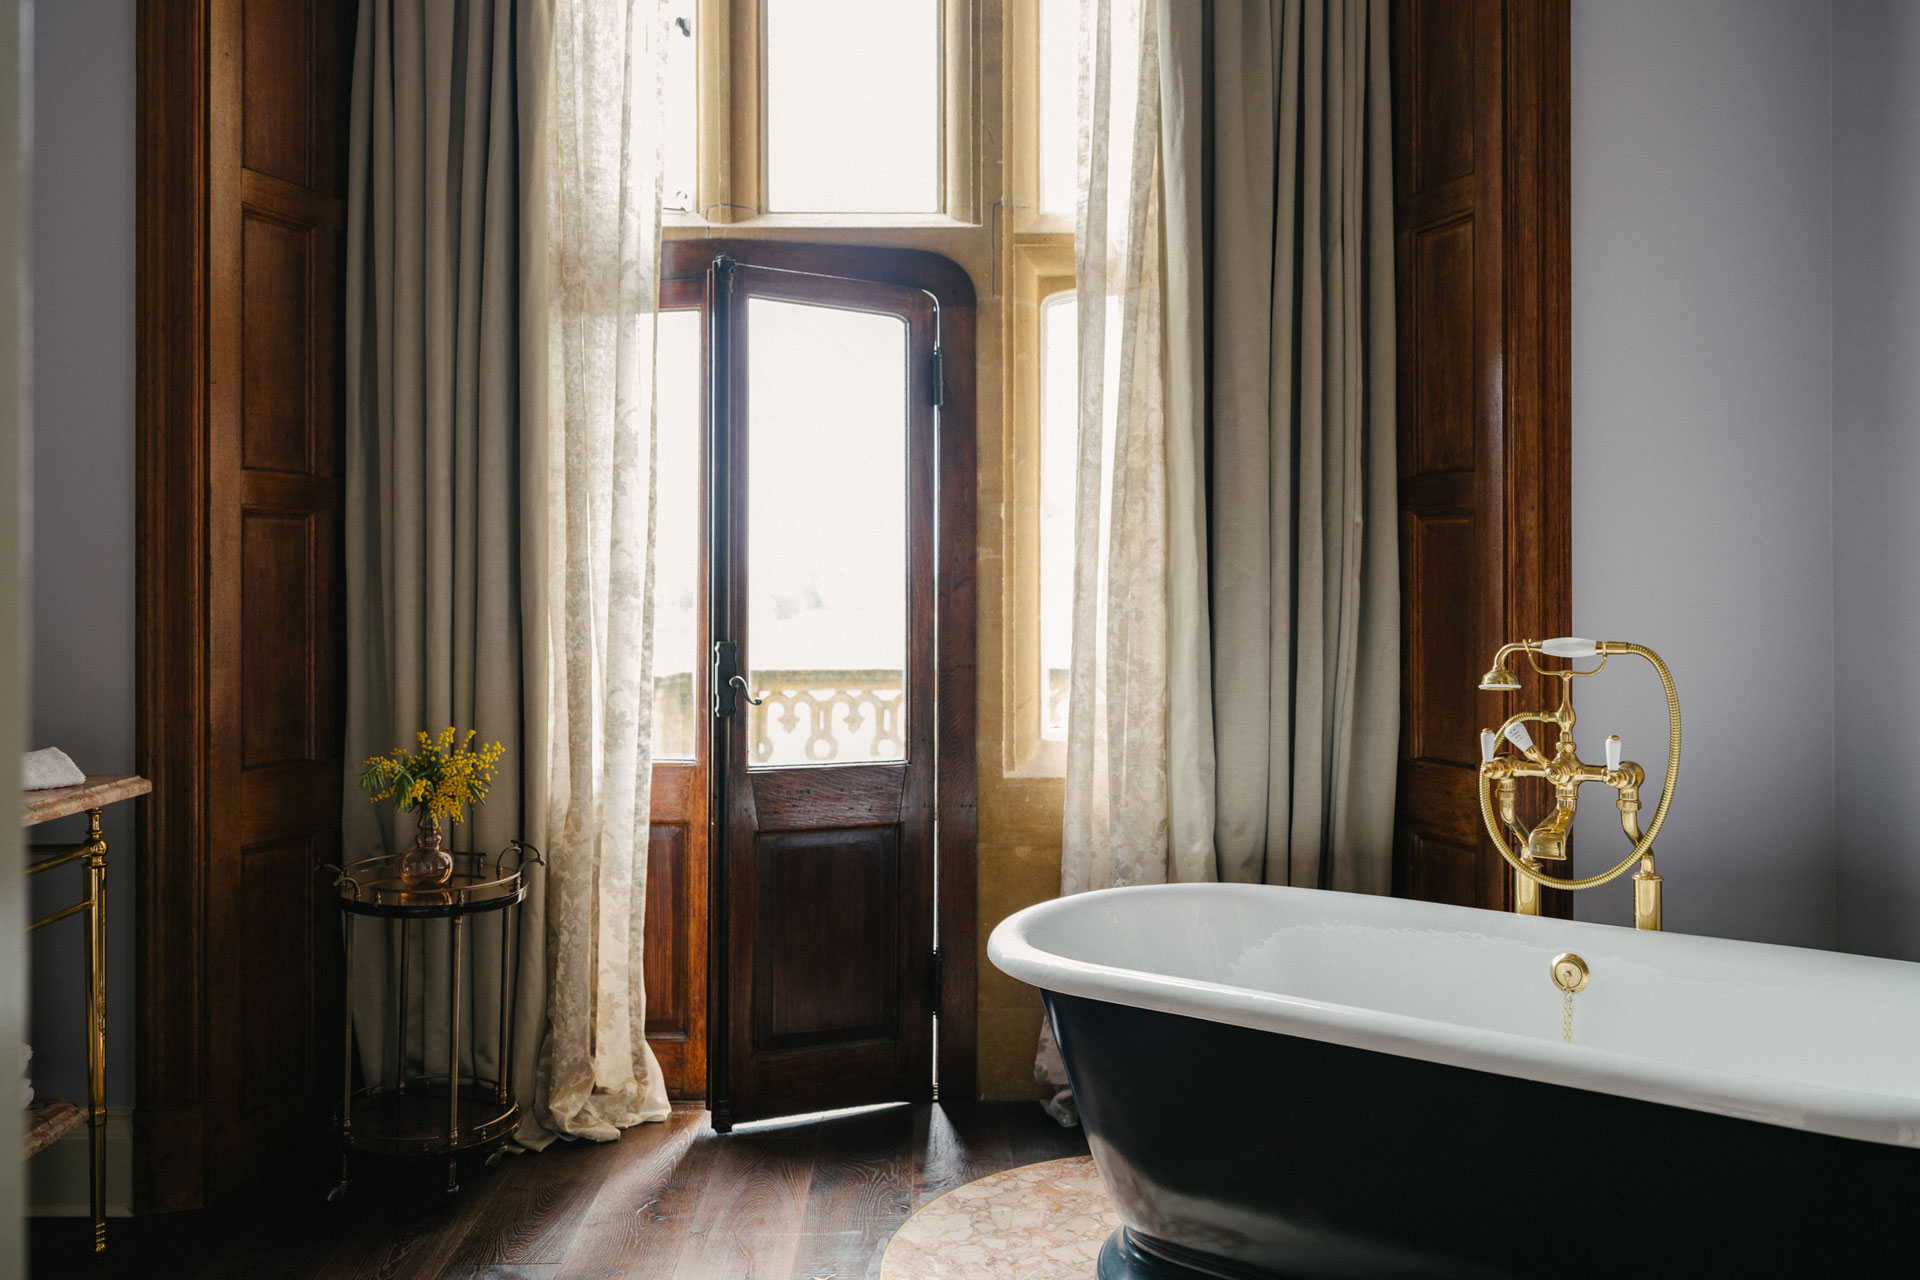 Estelle Manor suite bathroom with freestanding claw-foot bathtub